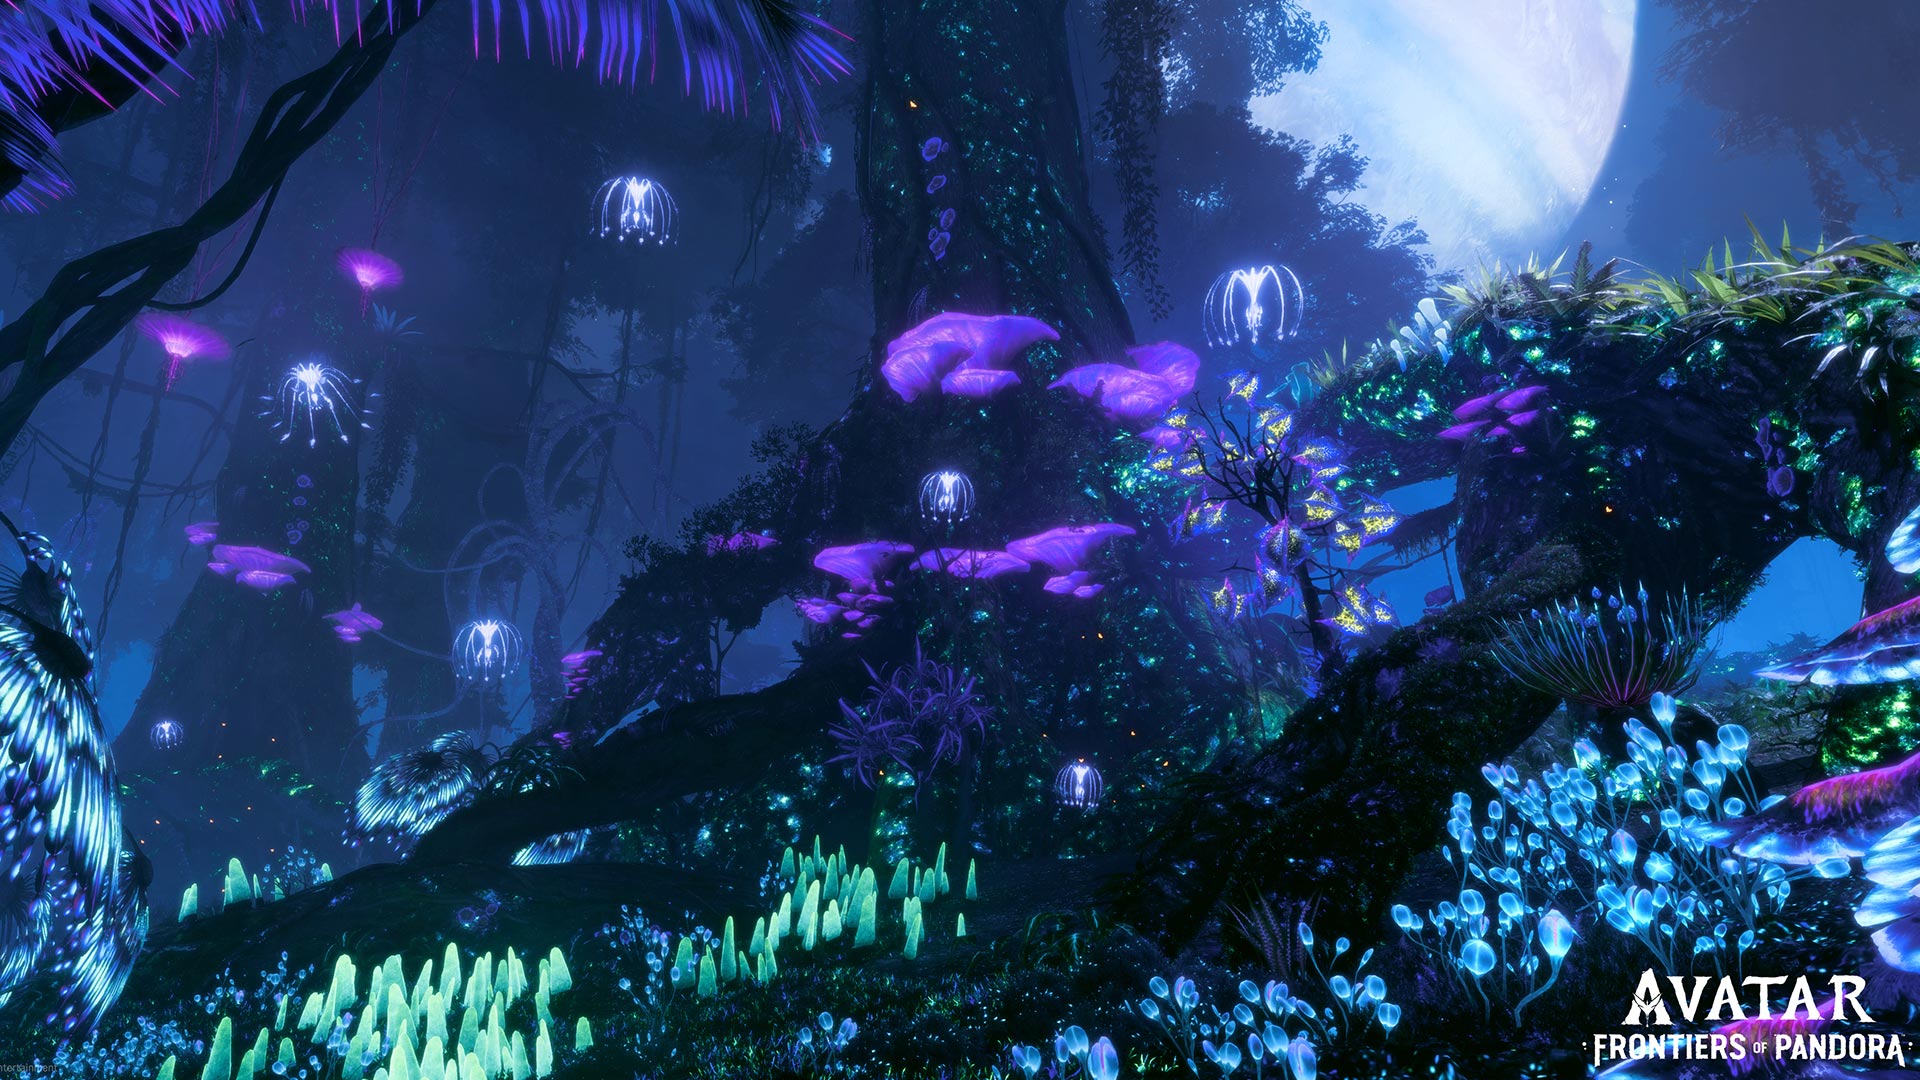 Avatar: Frontiers Of Pandora EU AMD Ubisoft Account